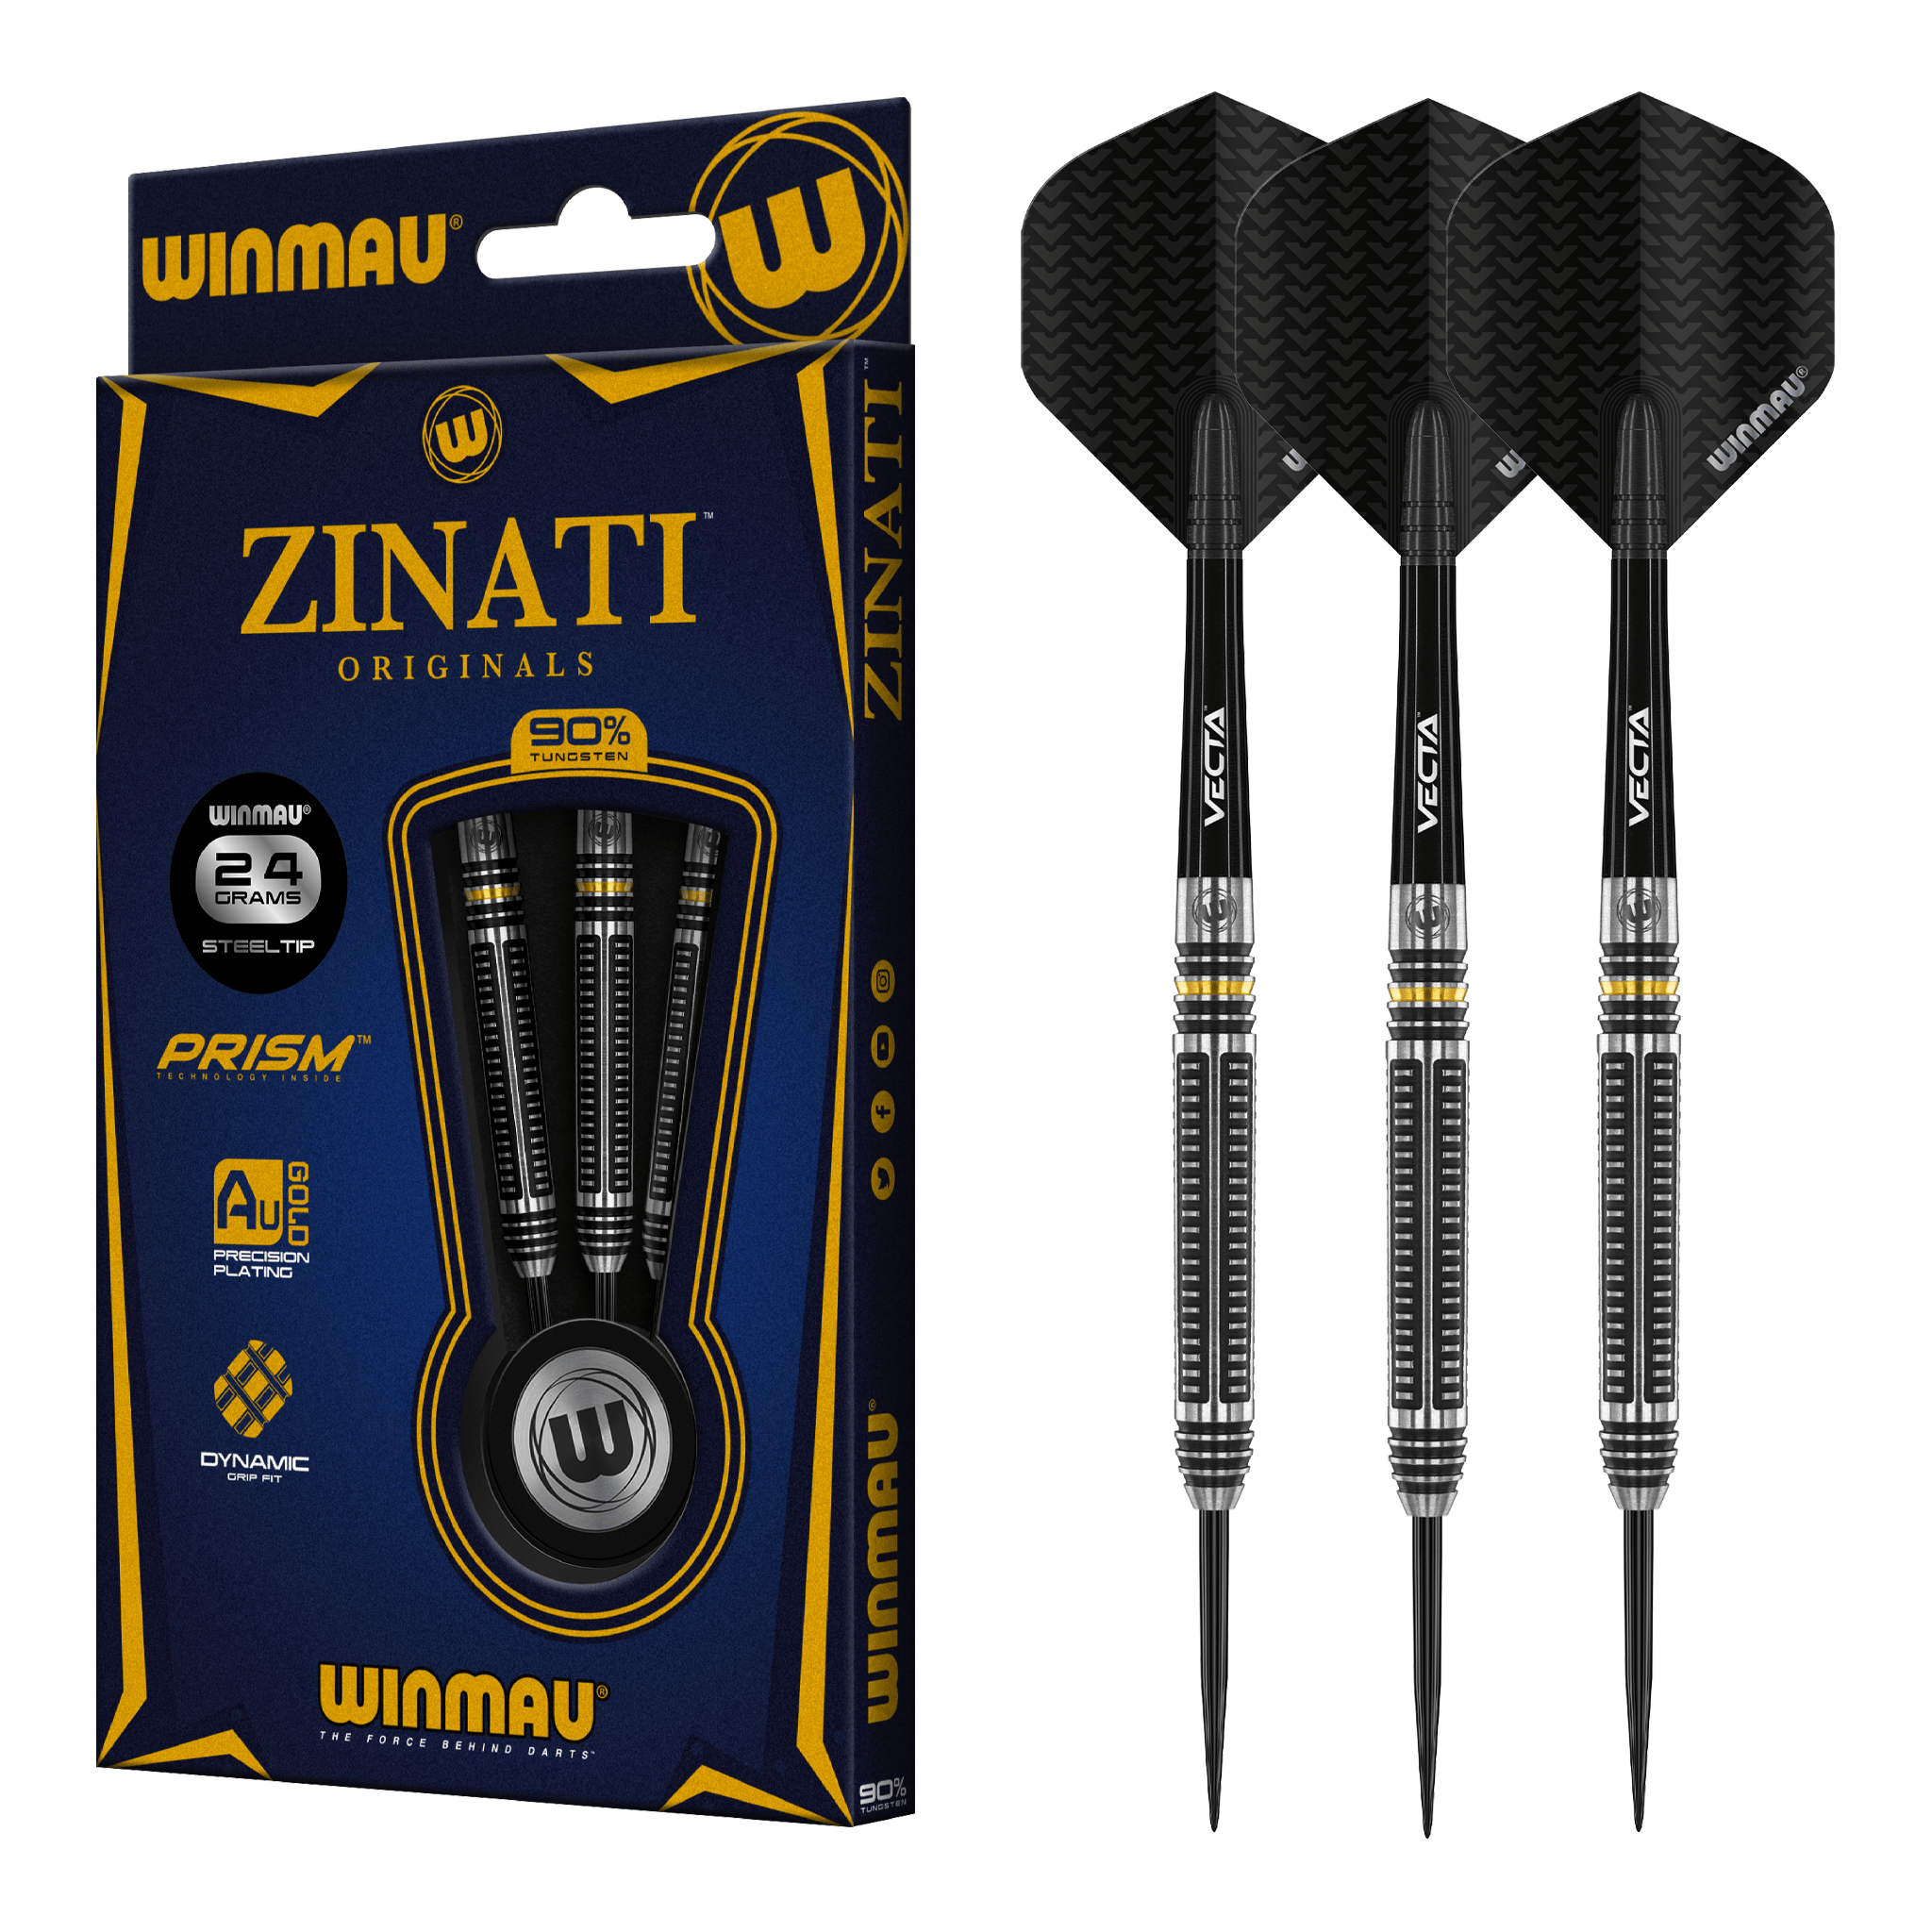 Winmau Zinati Steel Tip Darts - 90% Tungsten - 22 Grams Darts